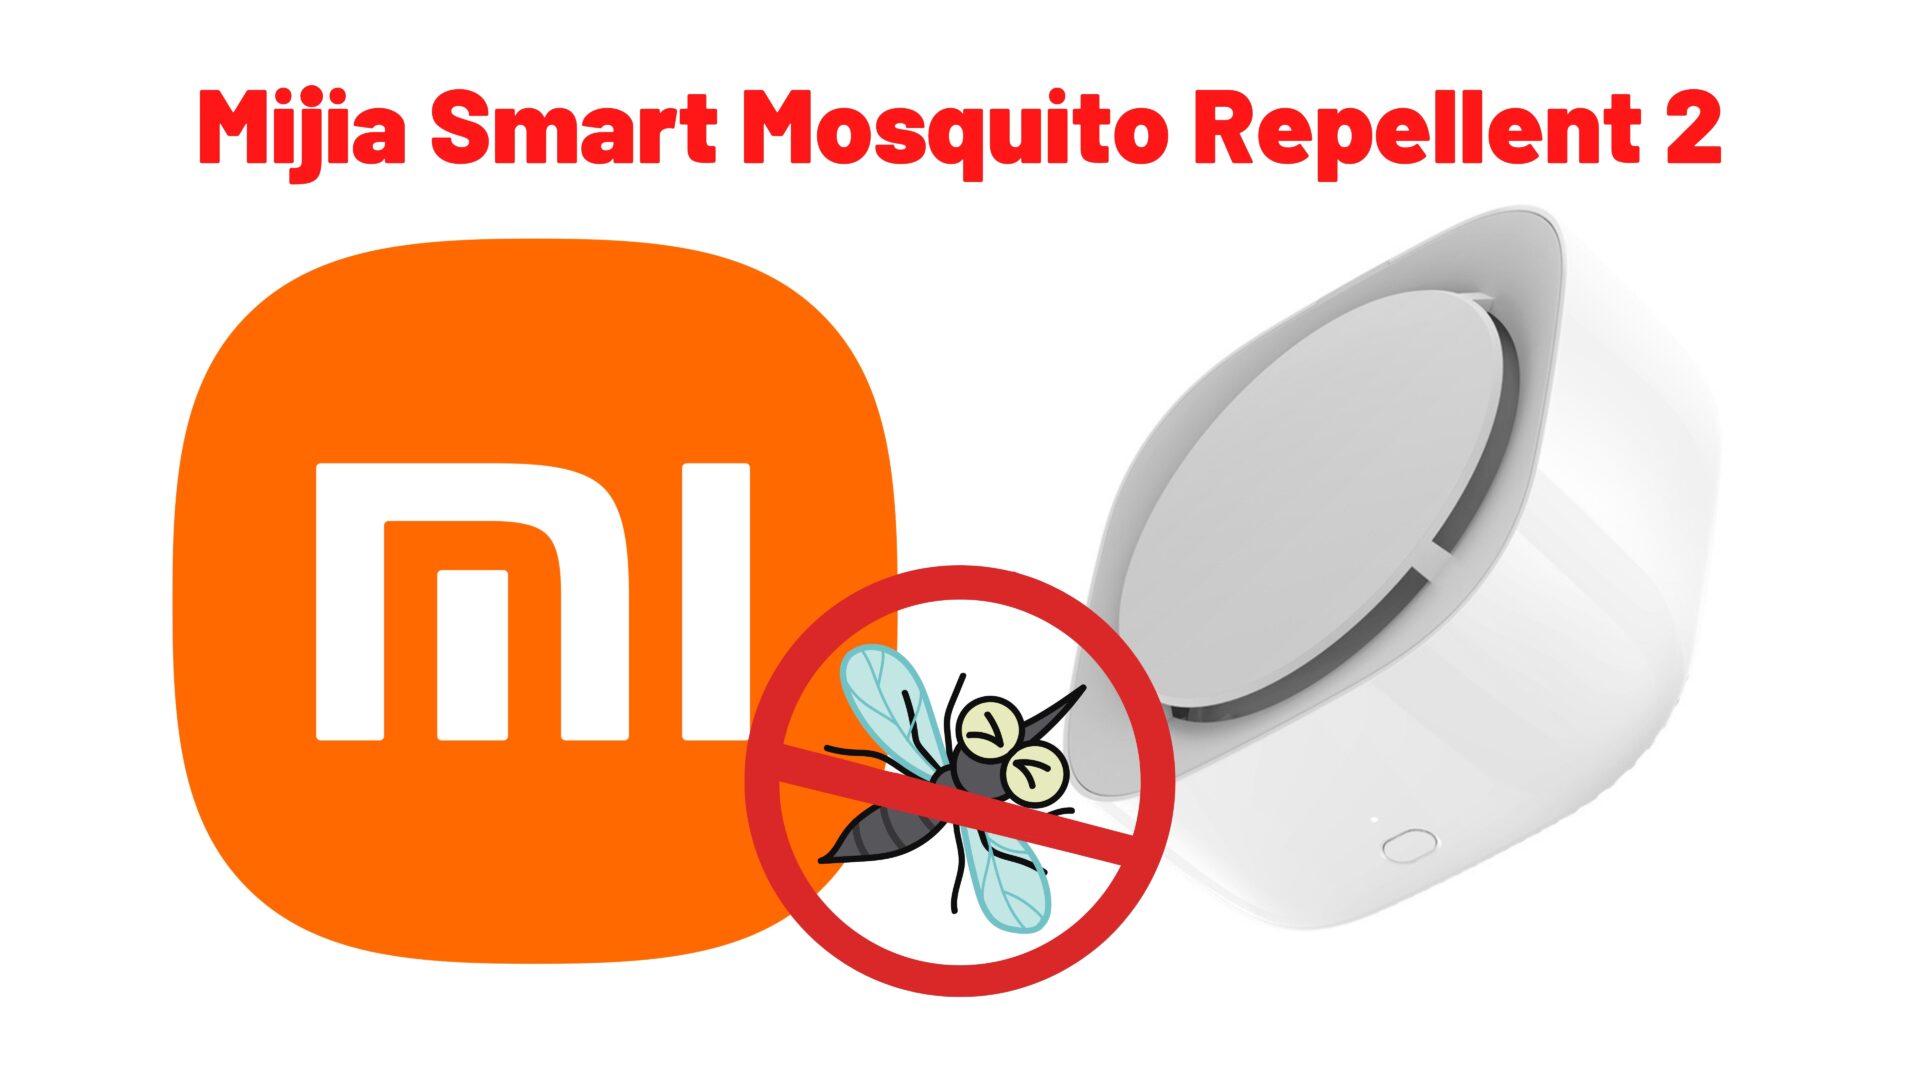 Mijia Smart Mosquito Repellent 2